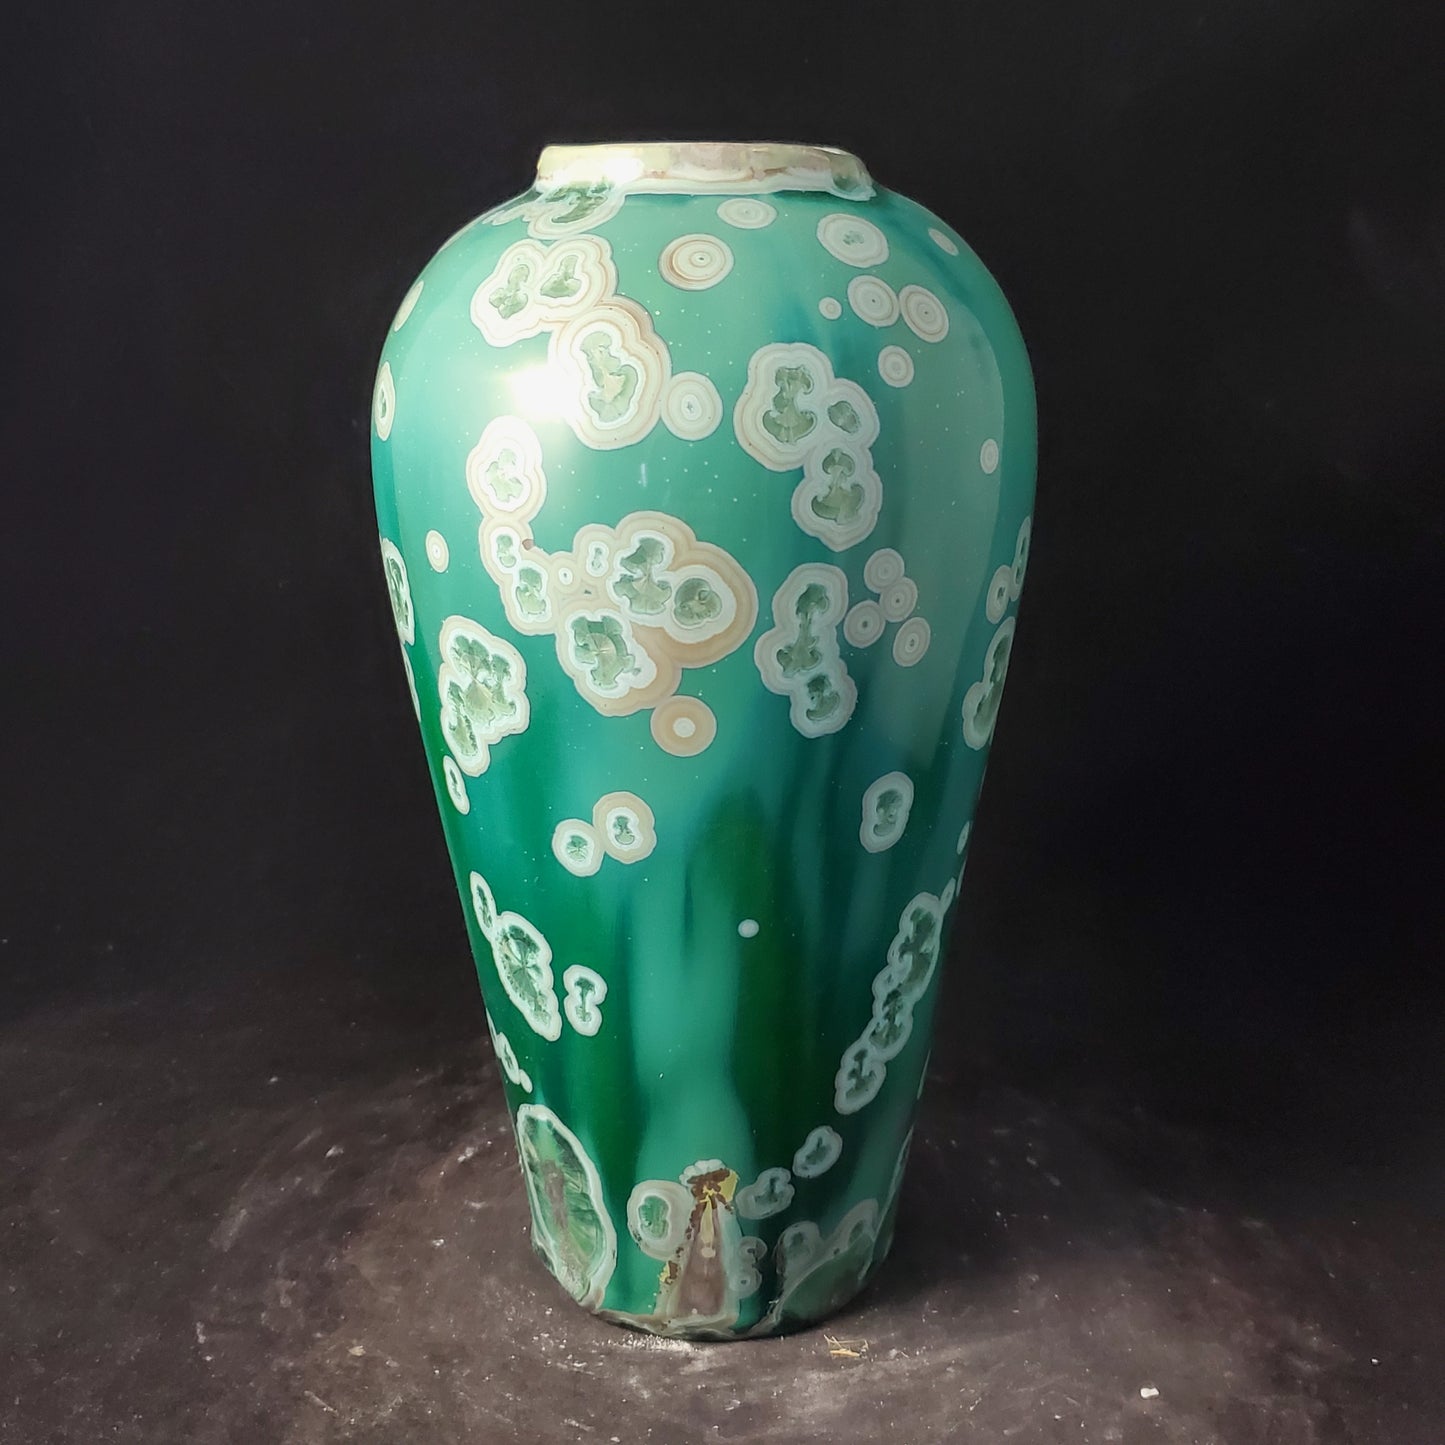 Crystalline Vase - 9"t x 5"w